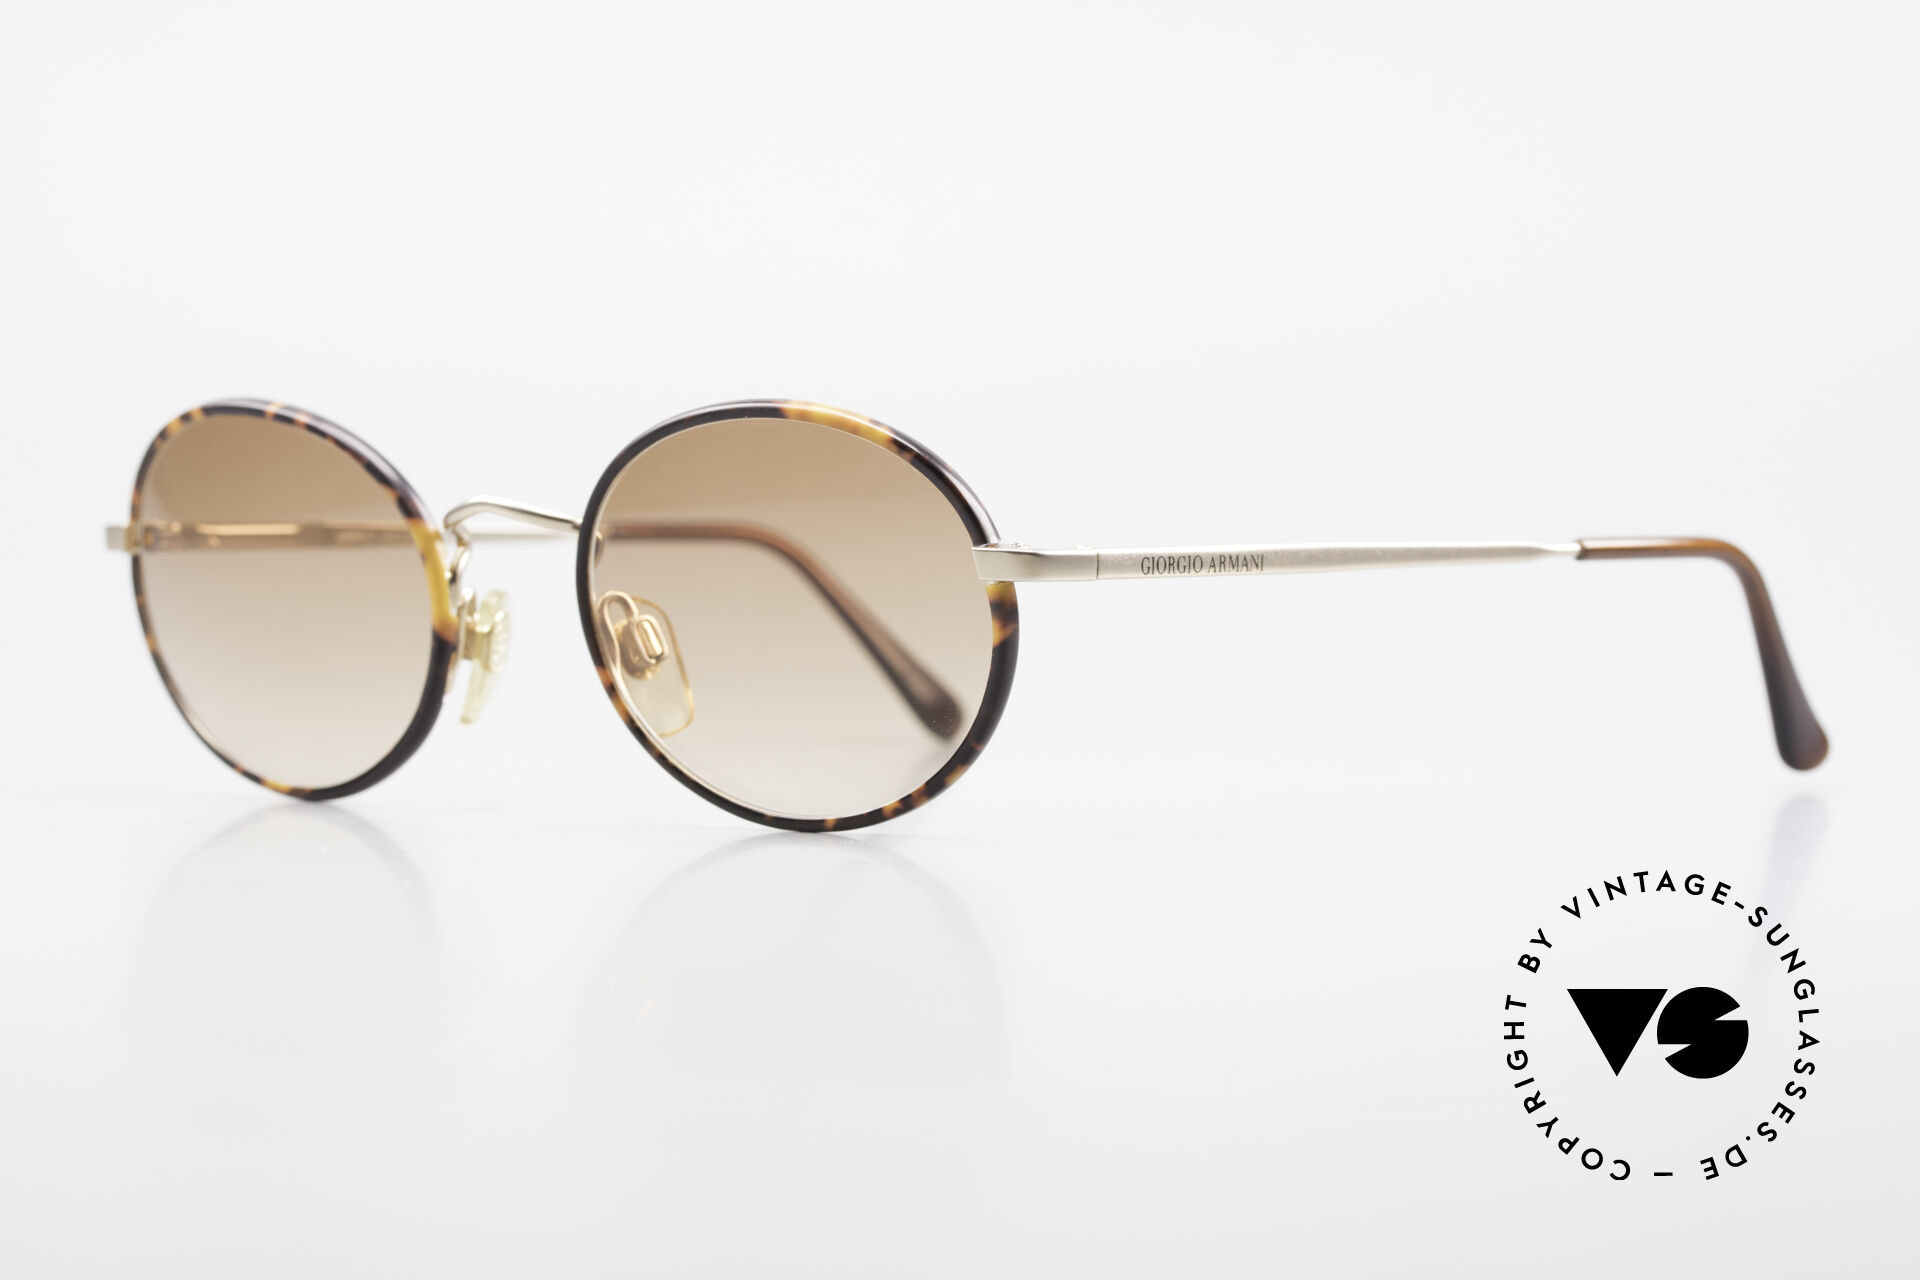 Sunglasses Giorgio Armani 235 Oval Vintage 80's Sunglasses